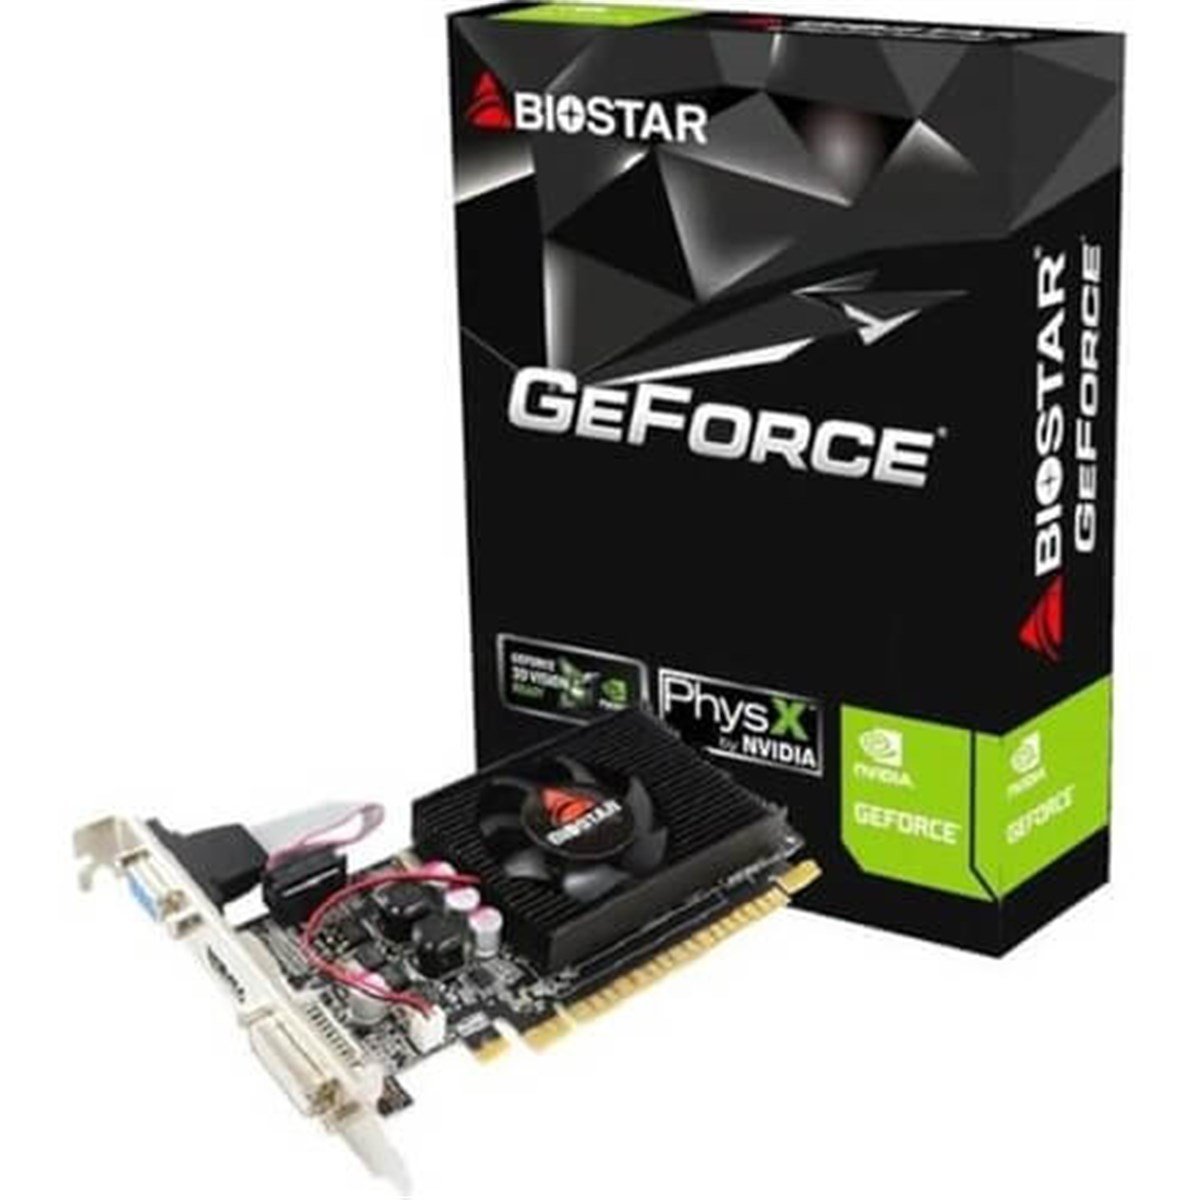 Biostar GeForce GT210 1GB 64Bit DDR3 PCI-Express 2.0 Ekran Kartı